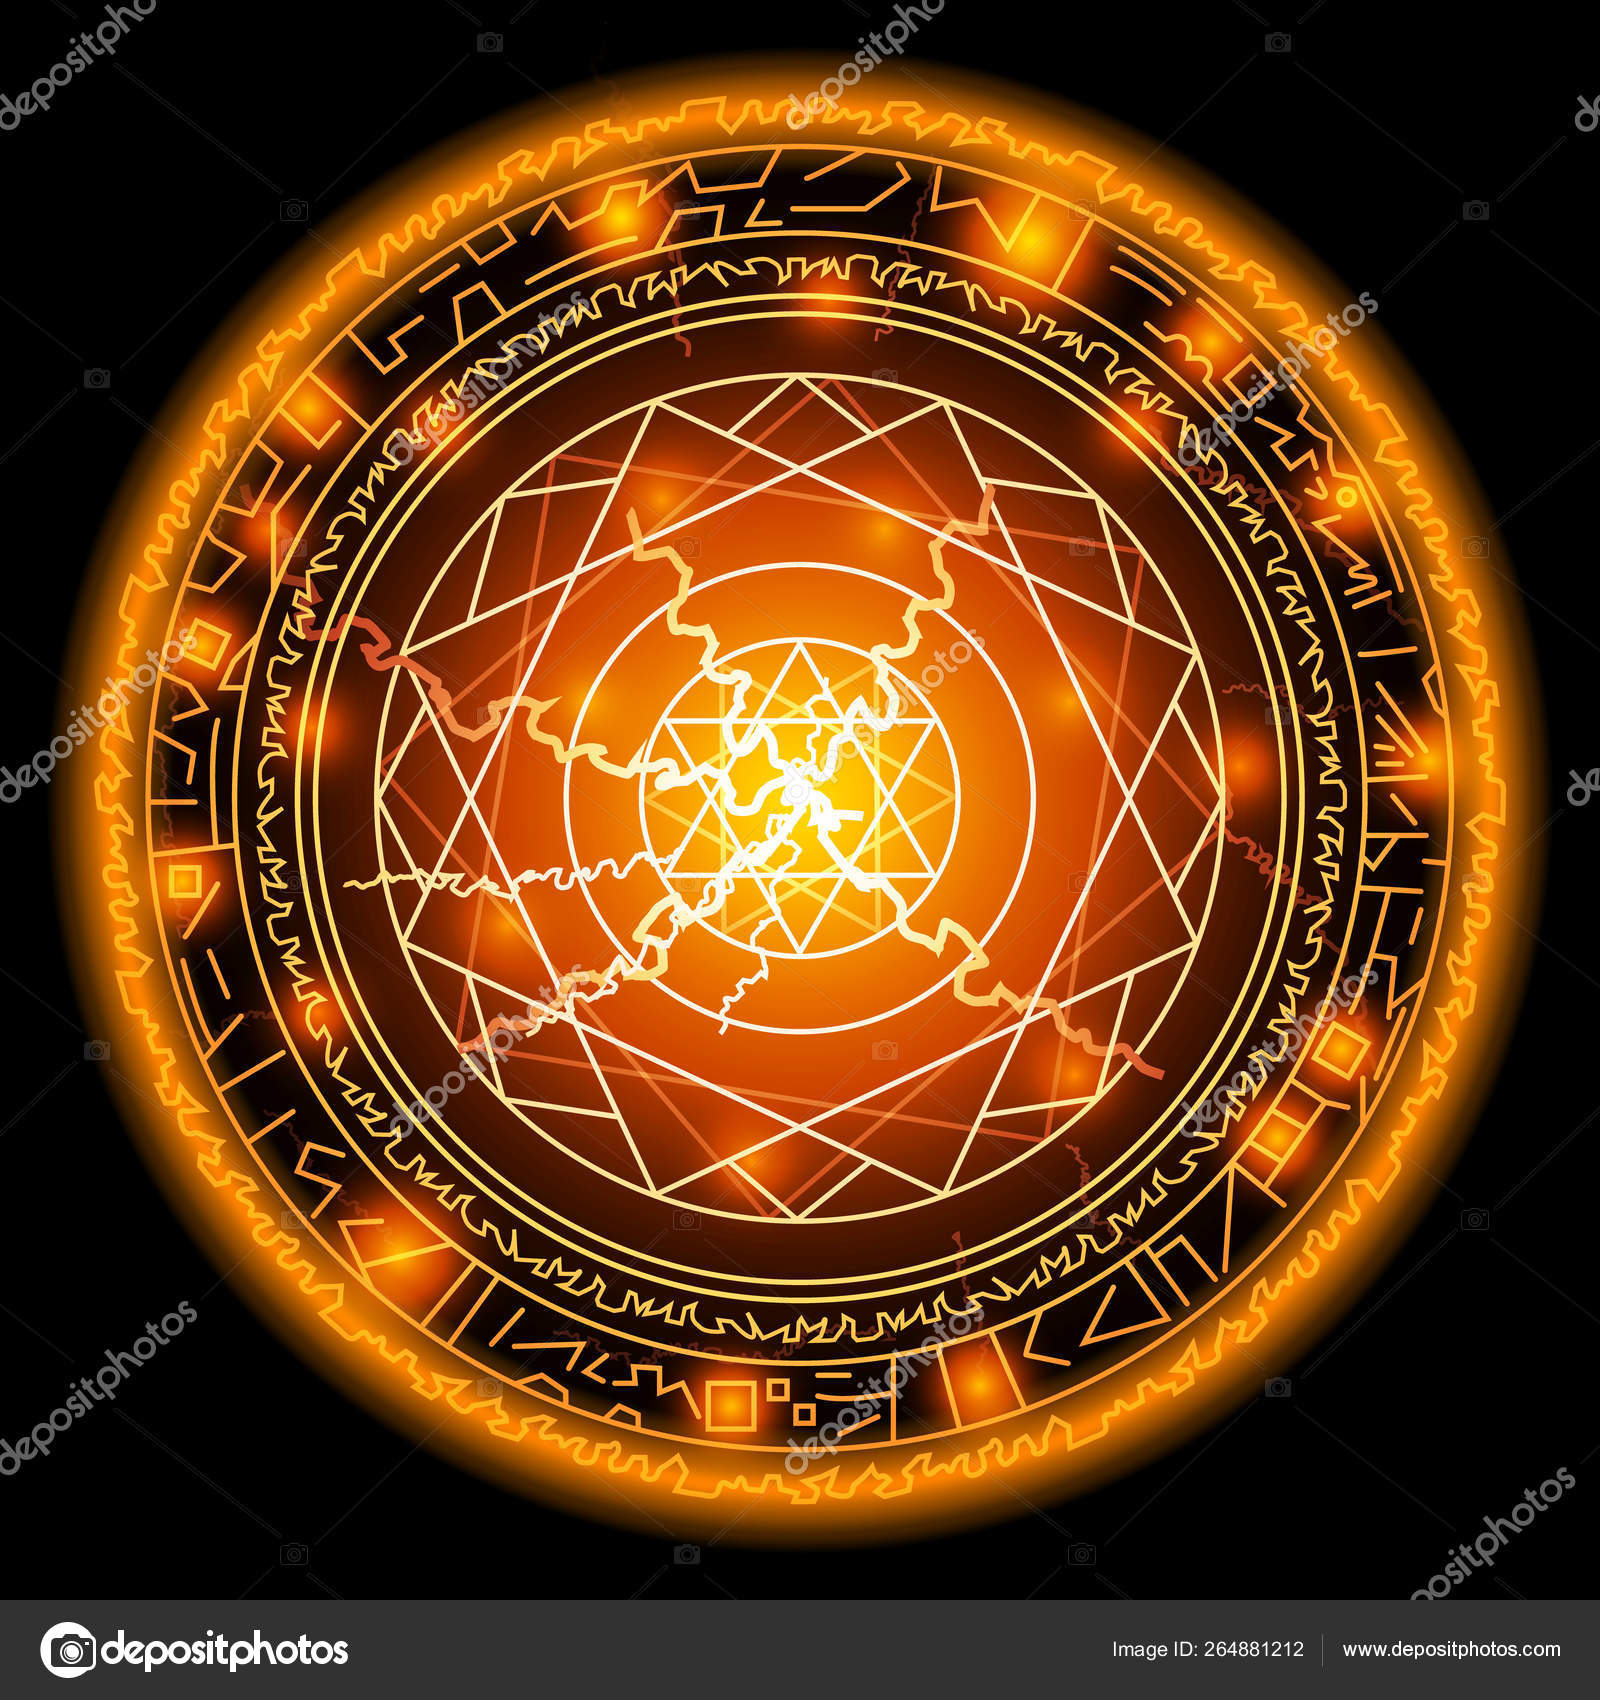 Featured image of post Dr Strange Magic Circle Wallpaper / Magic circle of doctor strange.